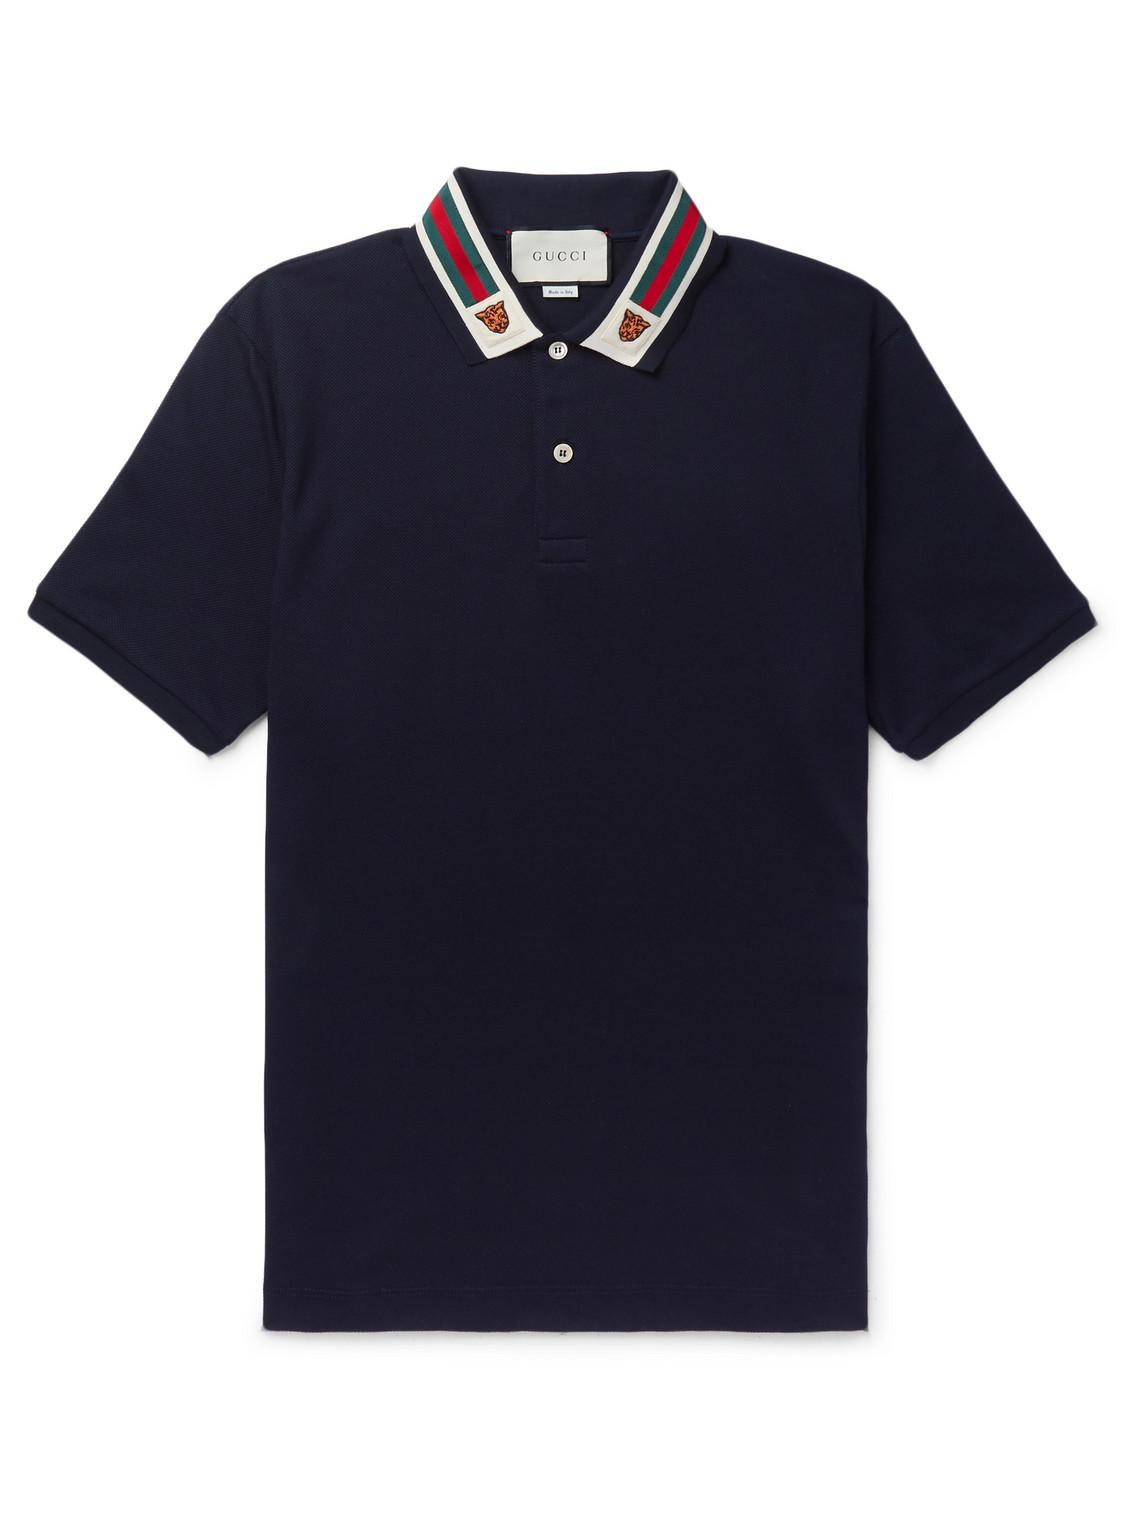 Henfald Alfabet Besætte Gucci Tiger-embroidered Cotton-pique Polo Shirt in Navy (Blue) for Men -  Save 41% - Lyst